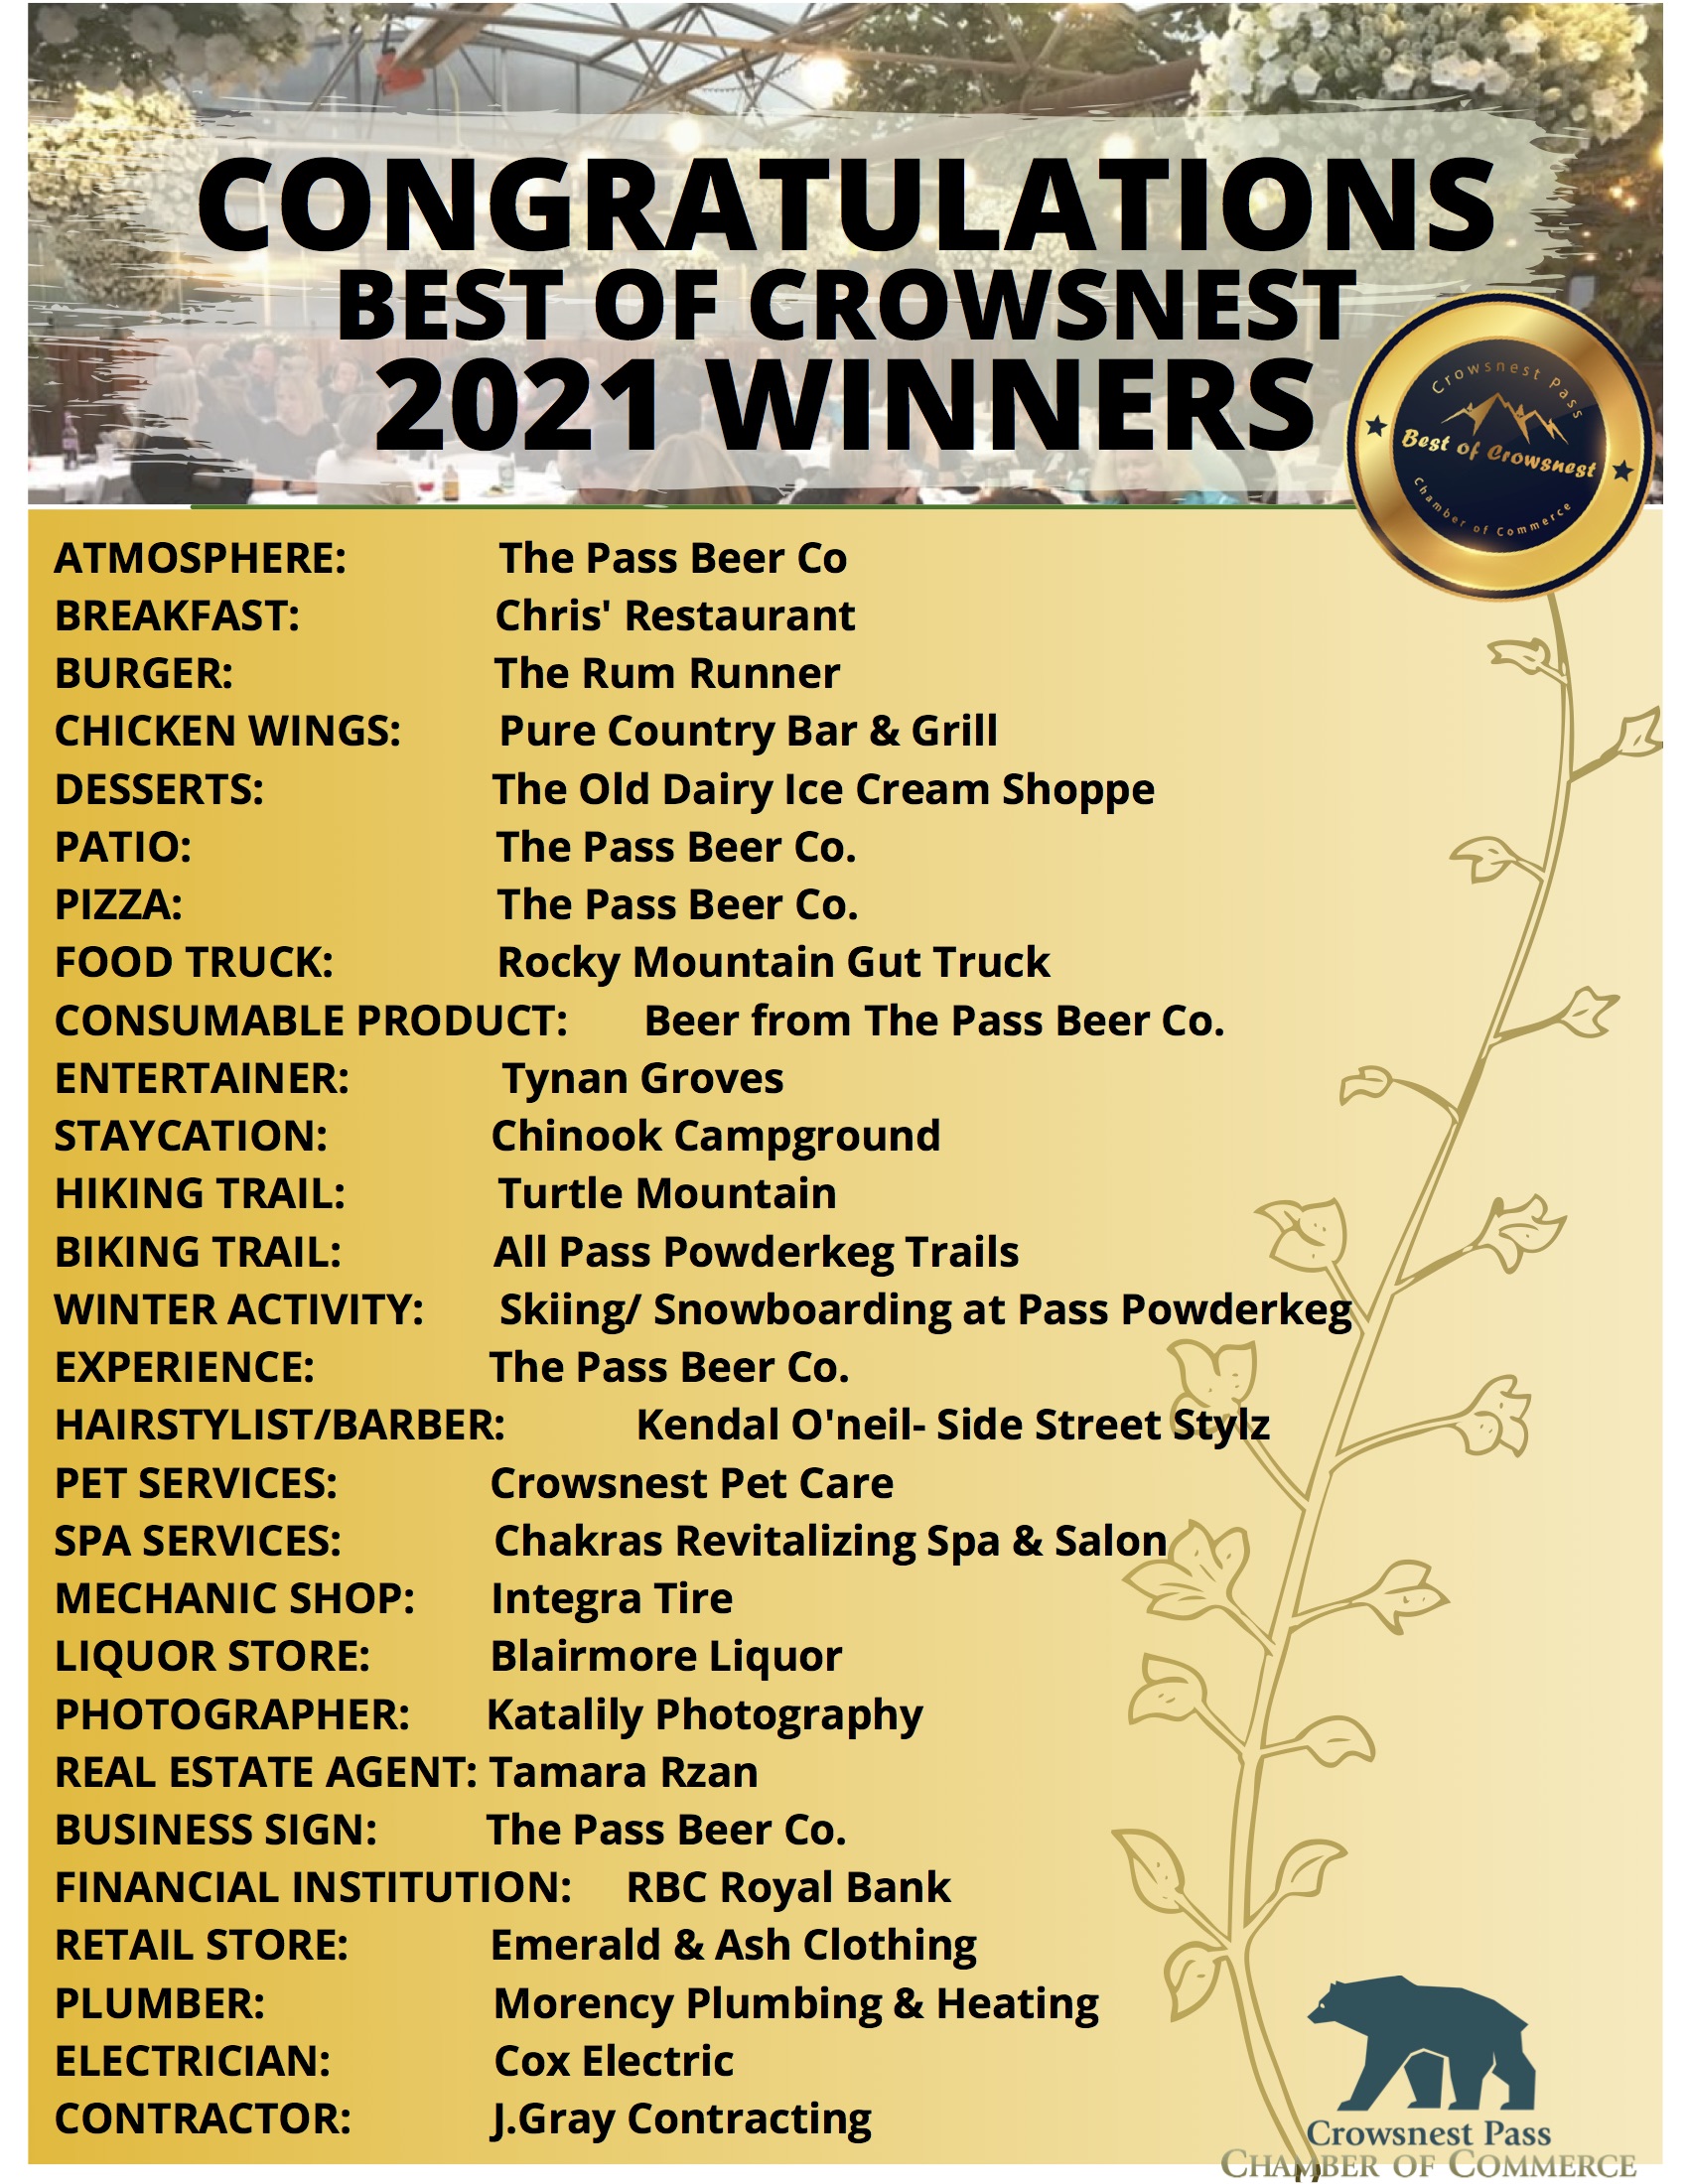  Best of Crowsnest Awards 2021